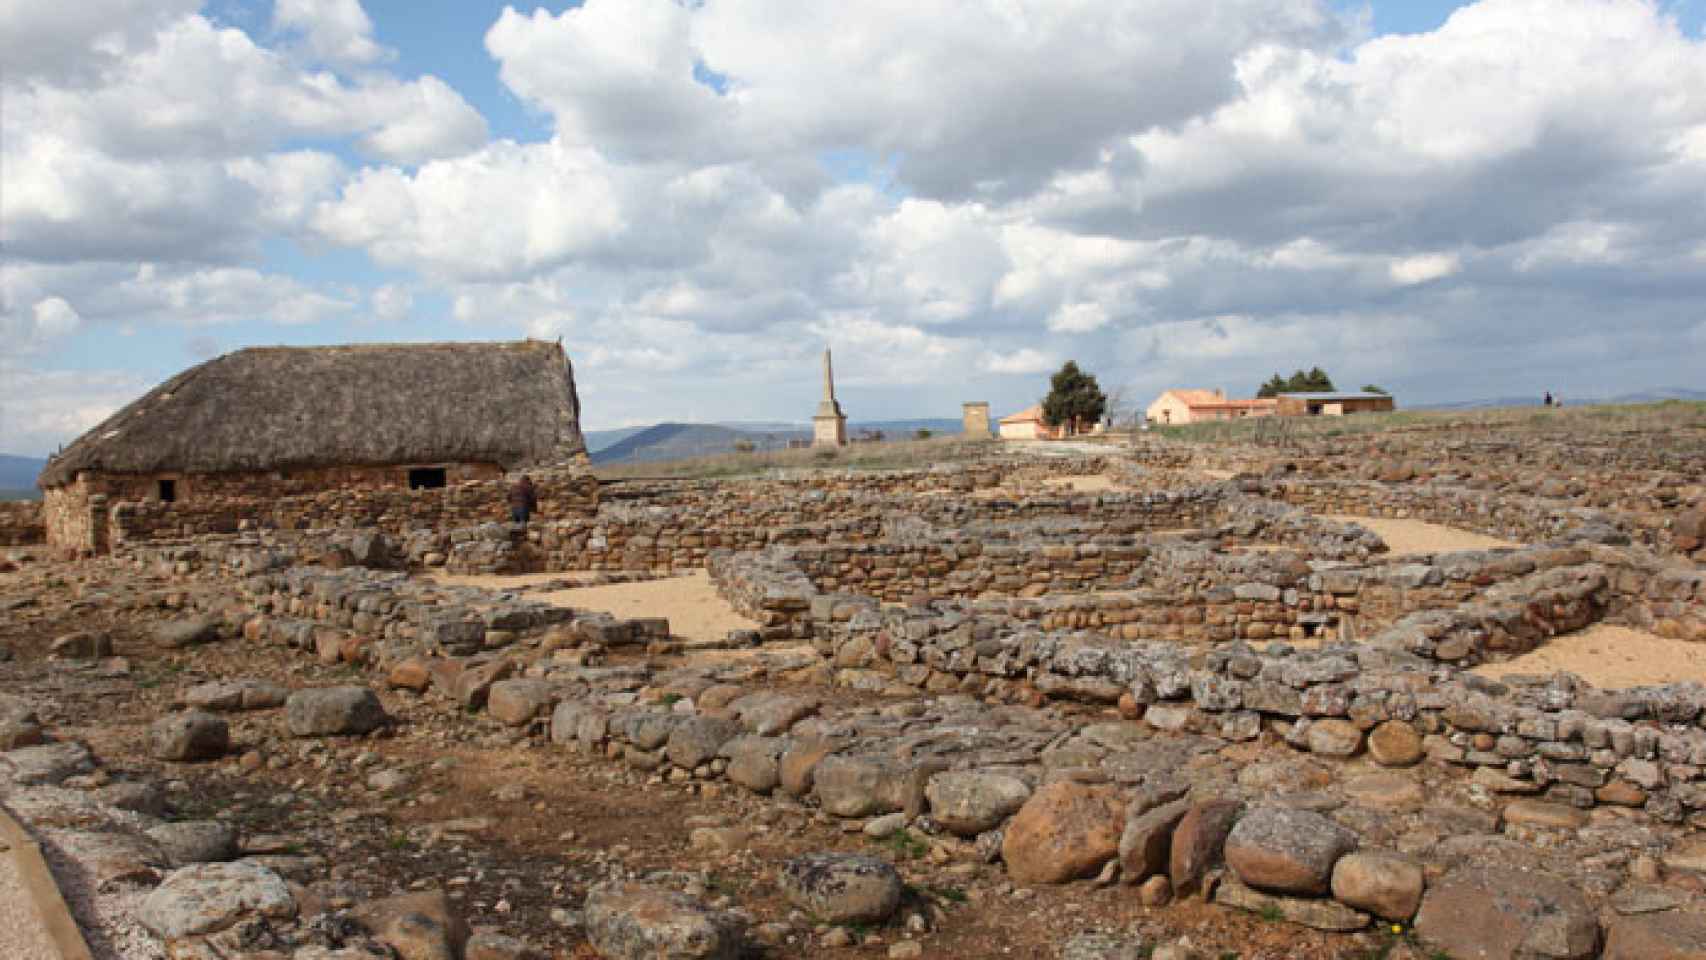 Yacimiento-arqueologico-de-Numancia